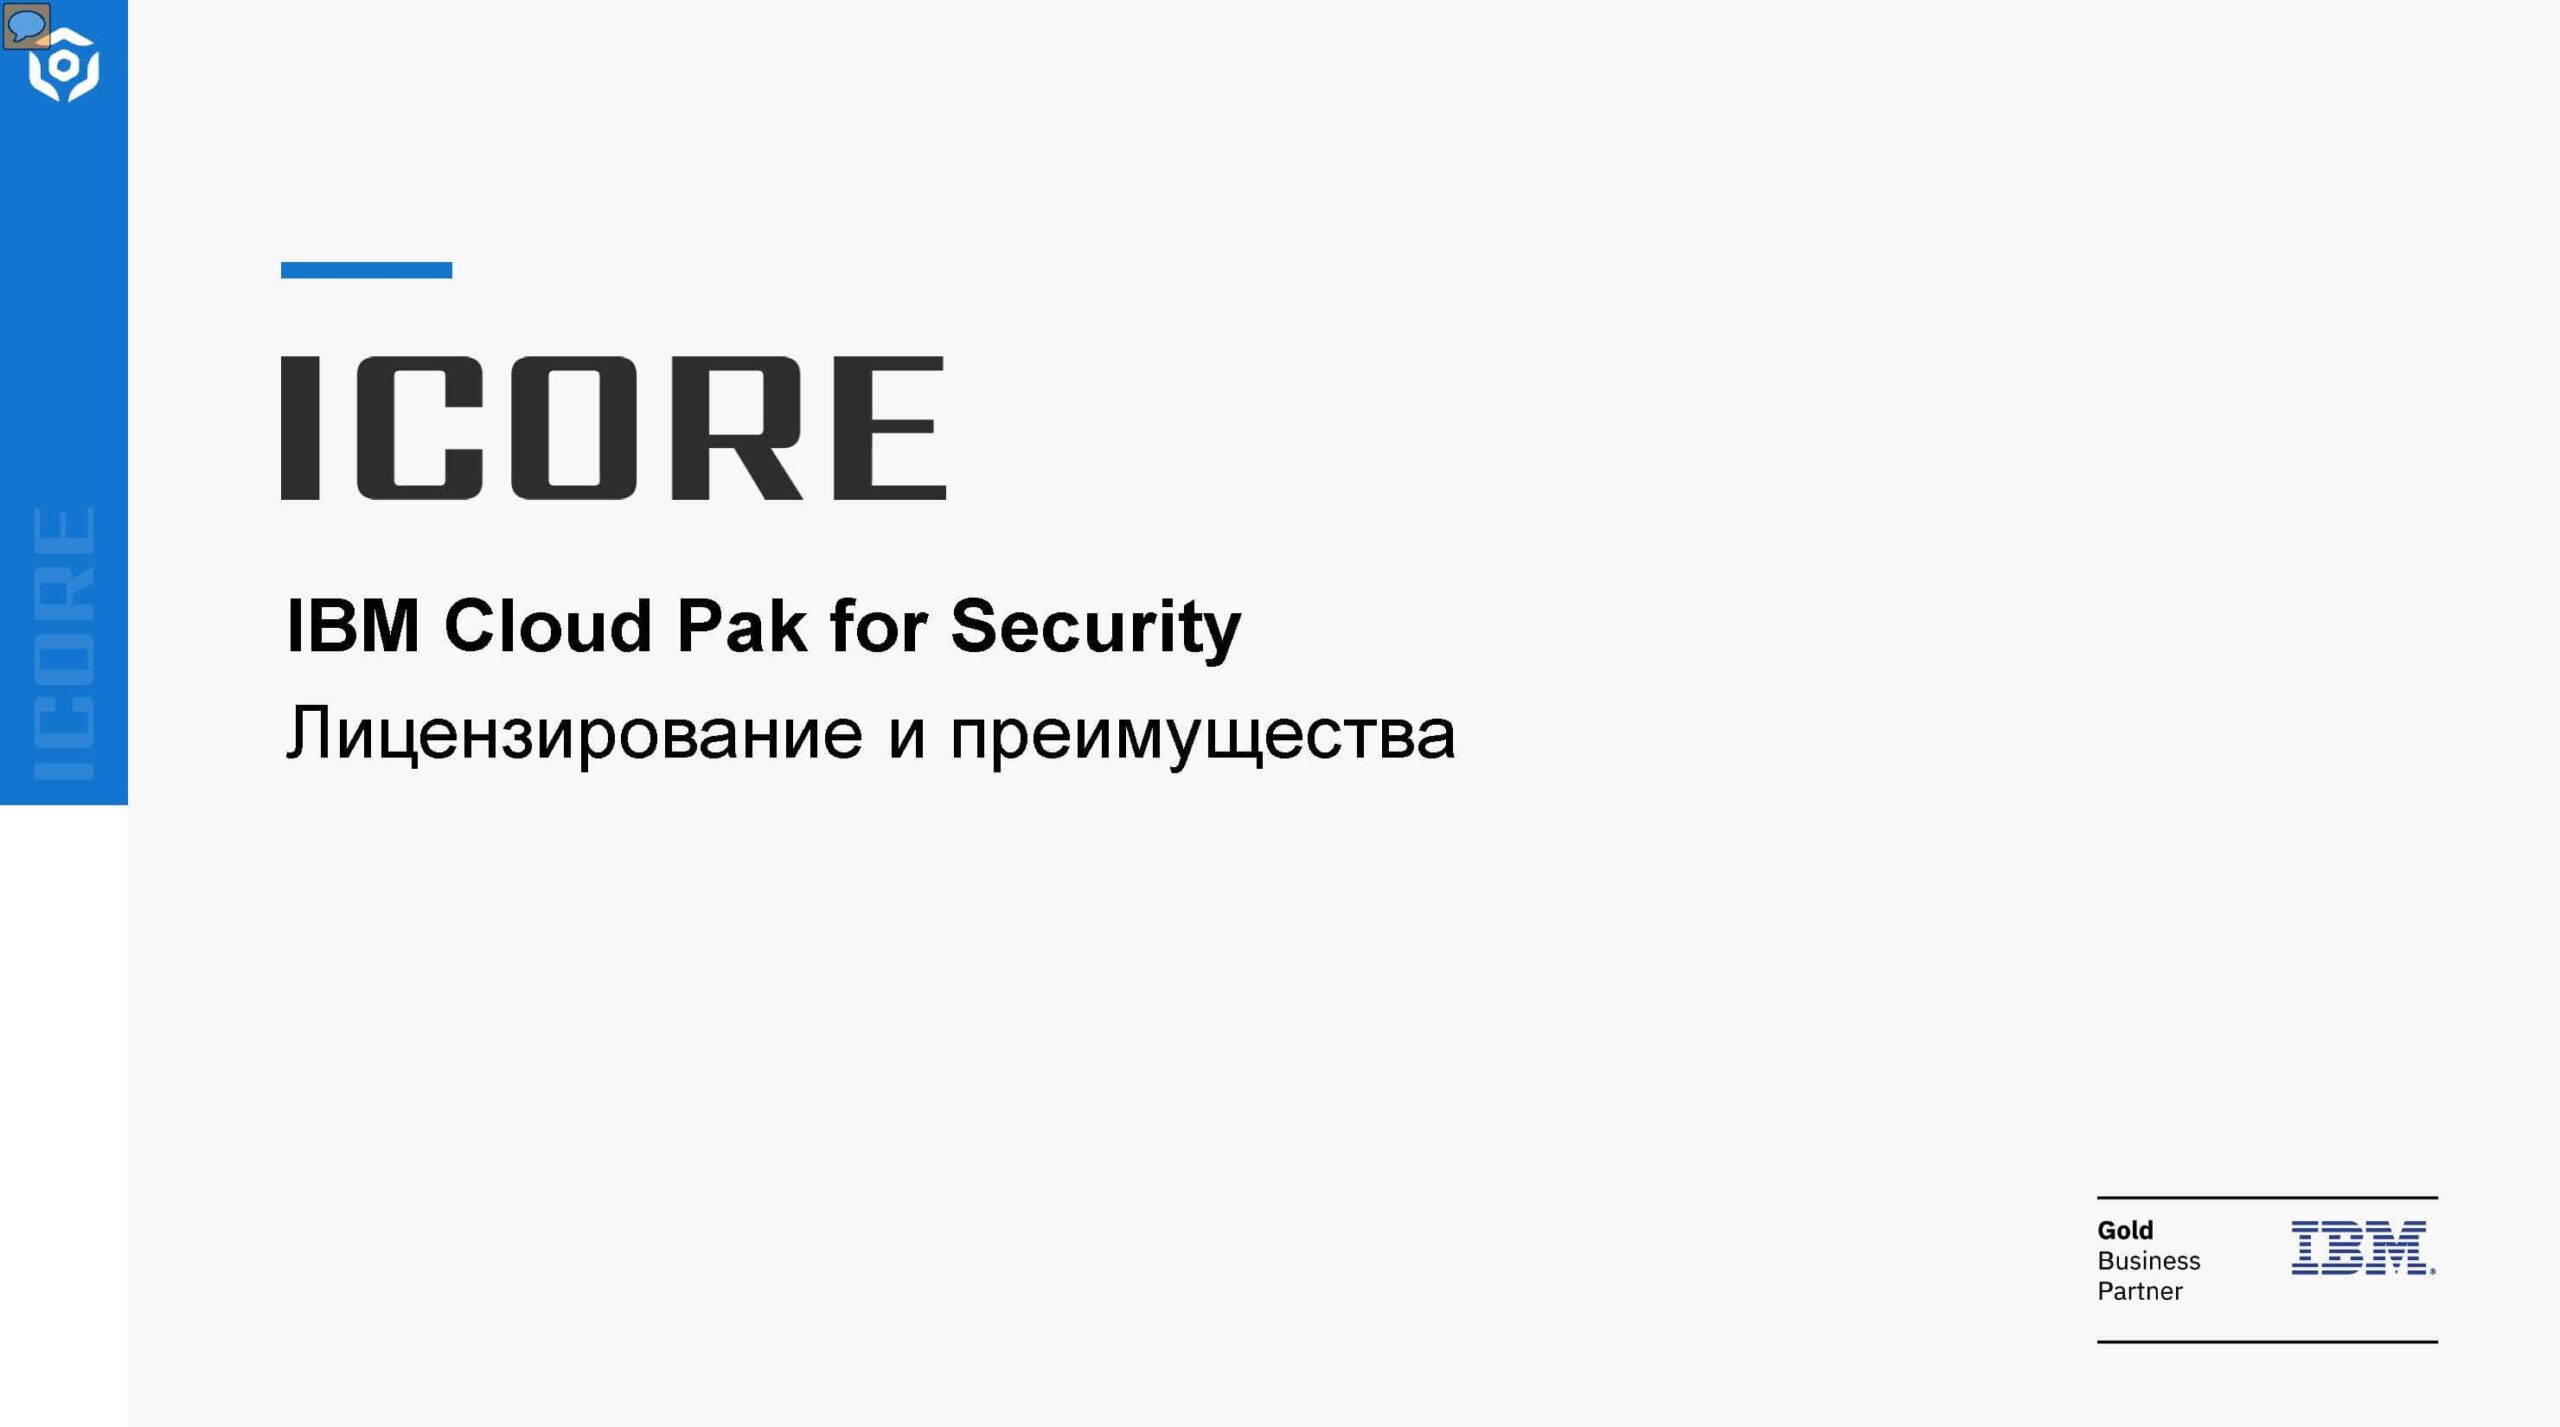 Презентация IBM Cloud Pak for Security Domains solutions - ICORE (1)